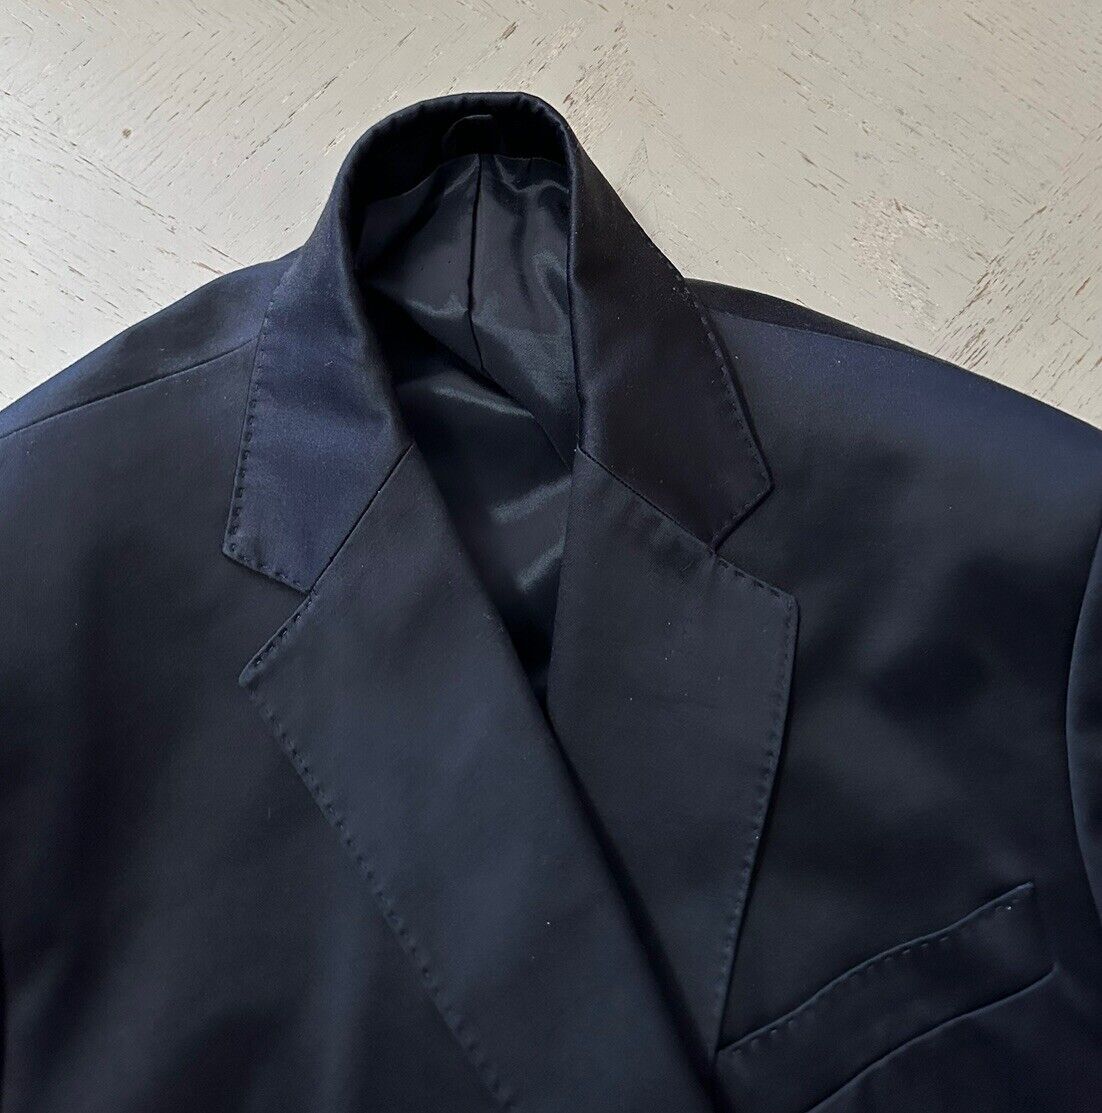 NWT GF Ferre Men’s Sport Coat Jacket Blazer Black 44R US/54R Eu Italy